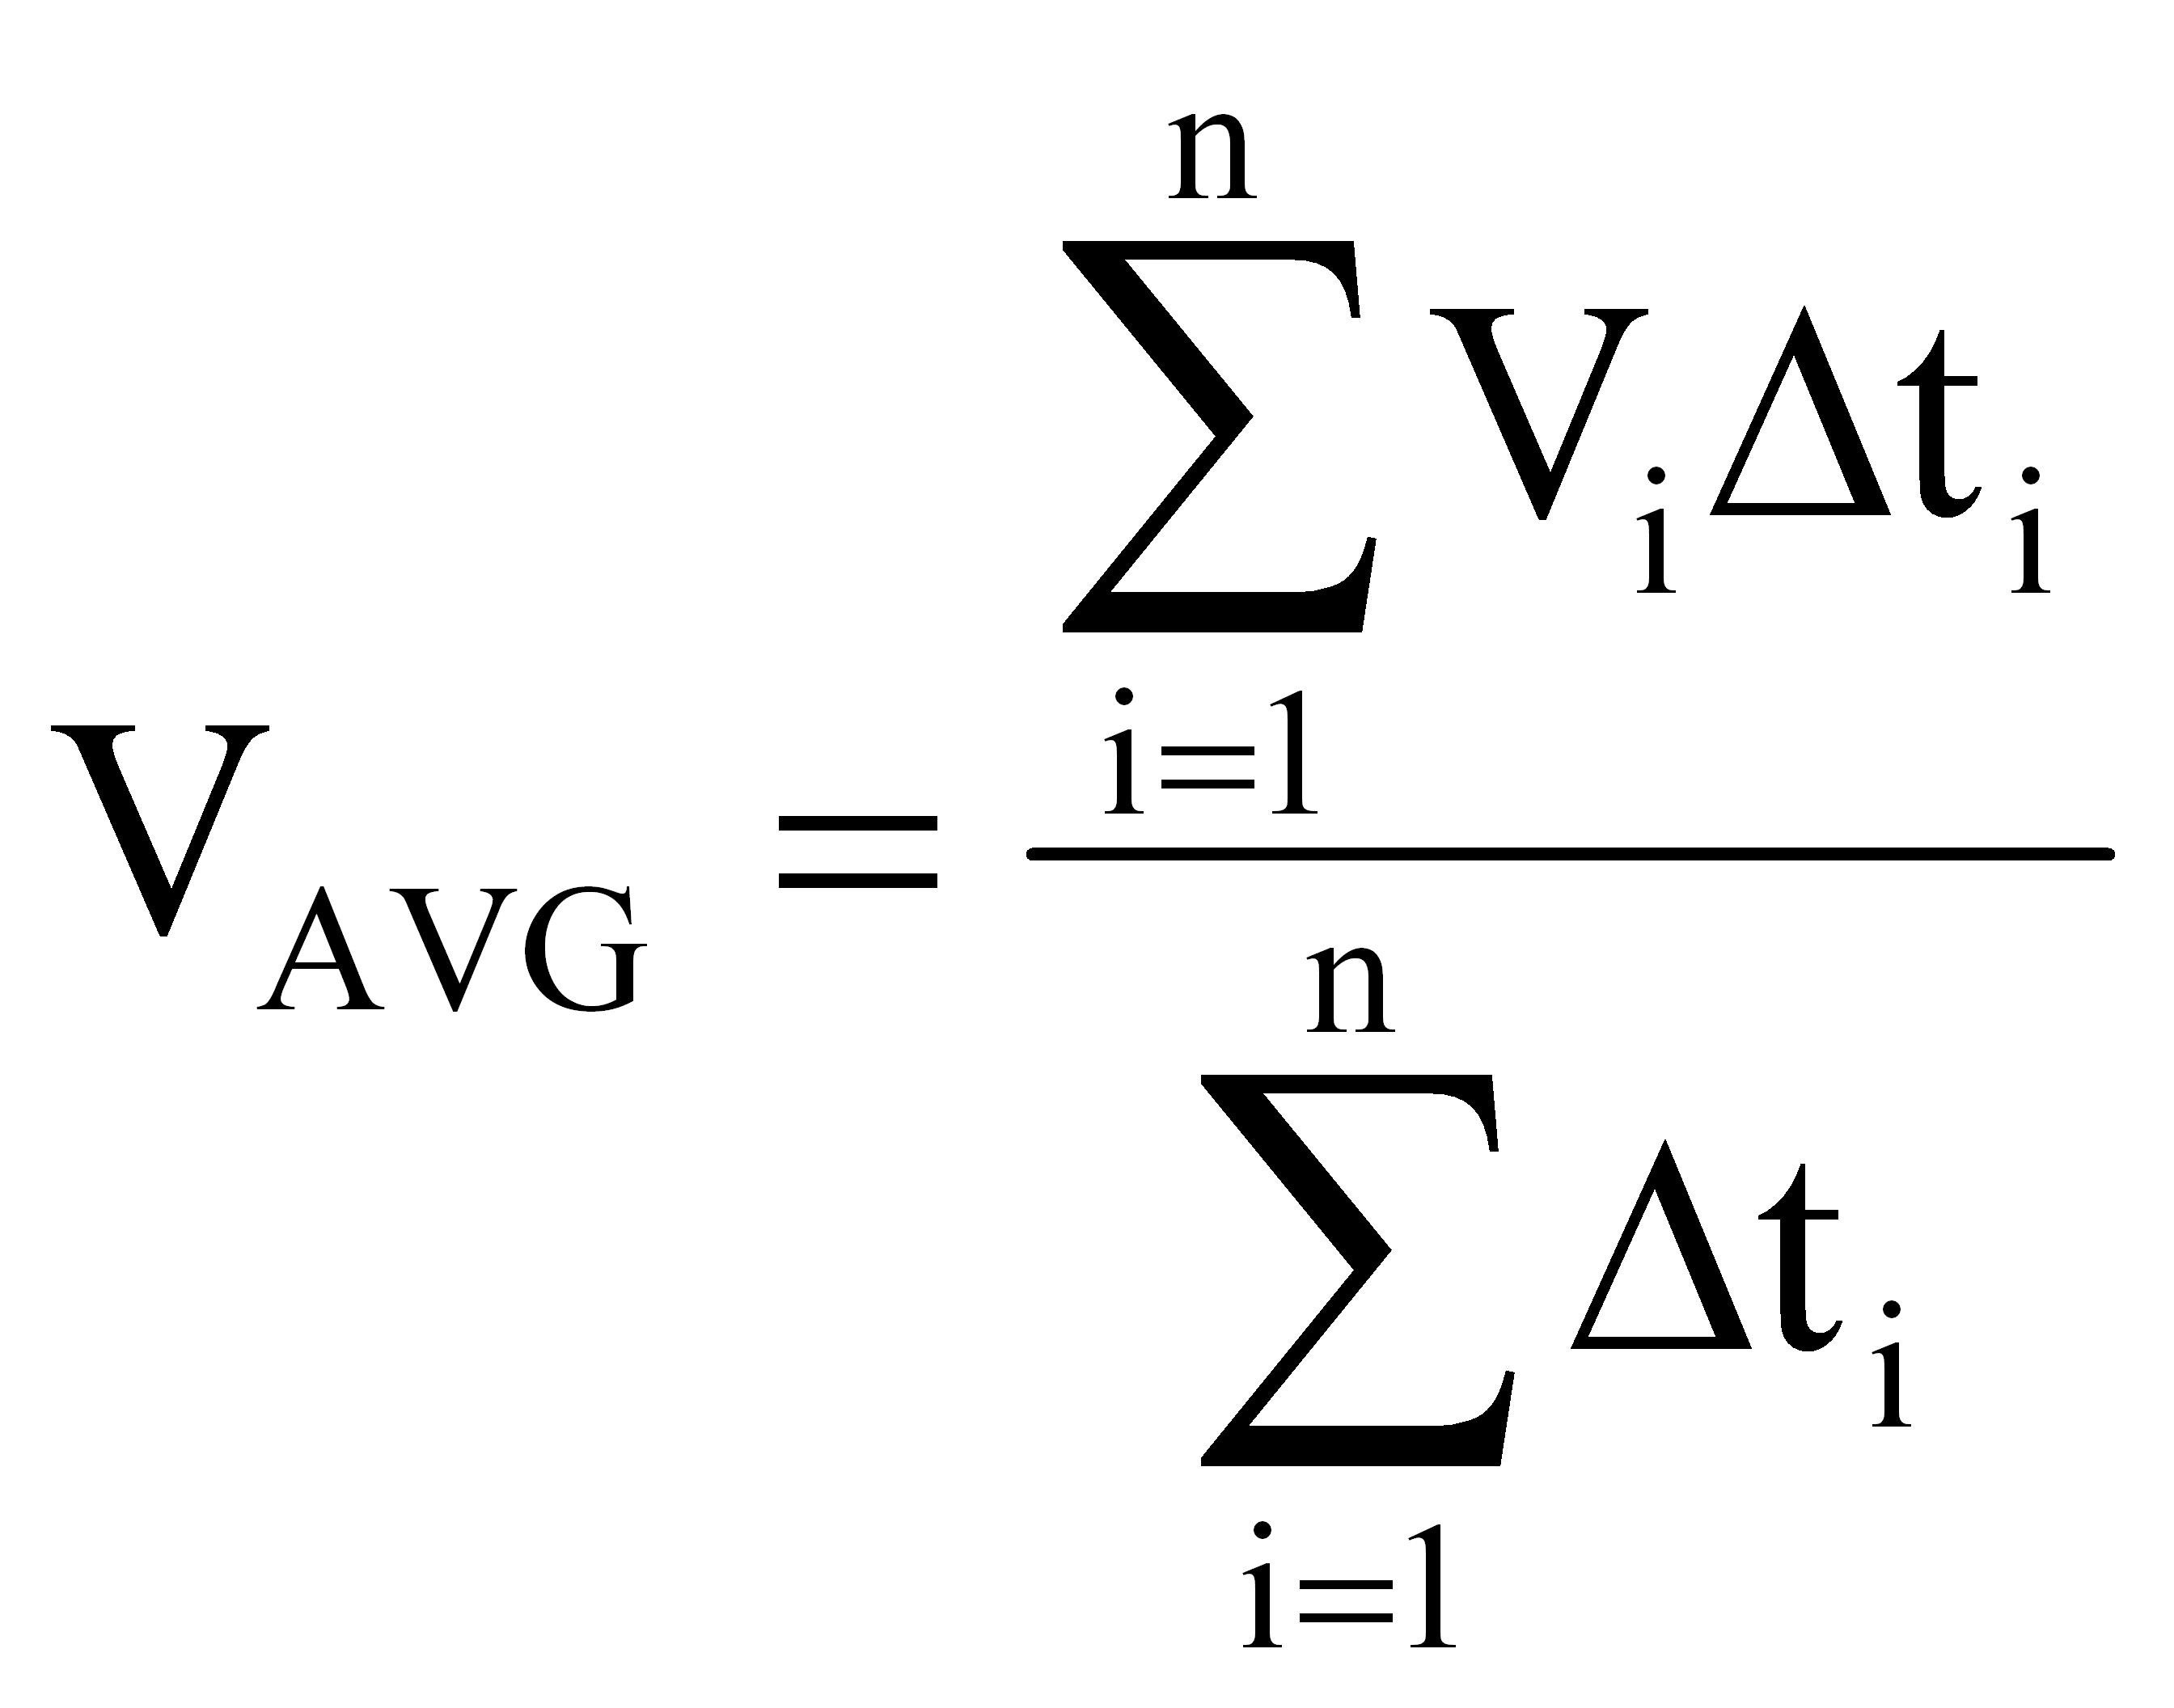 average speed equation